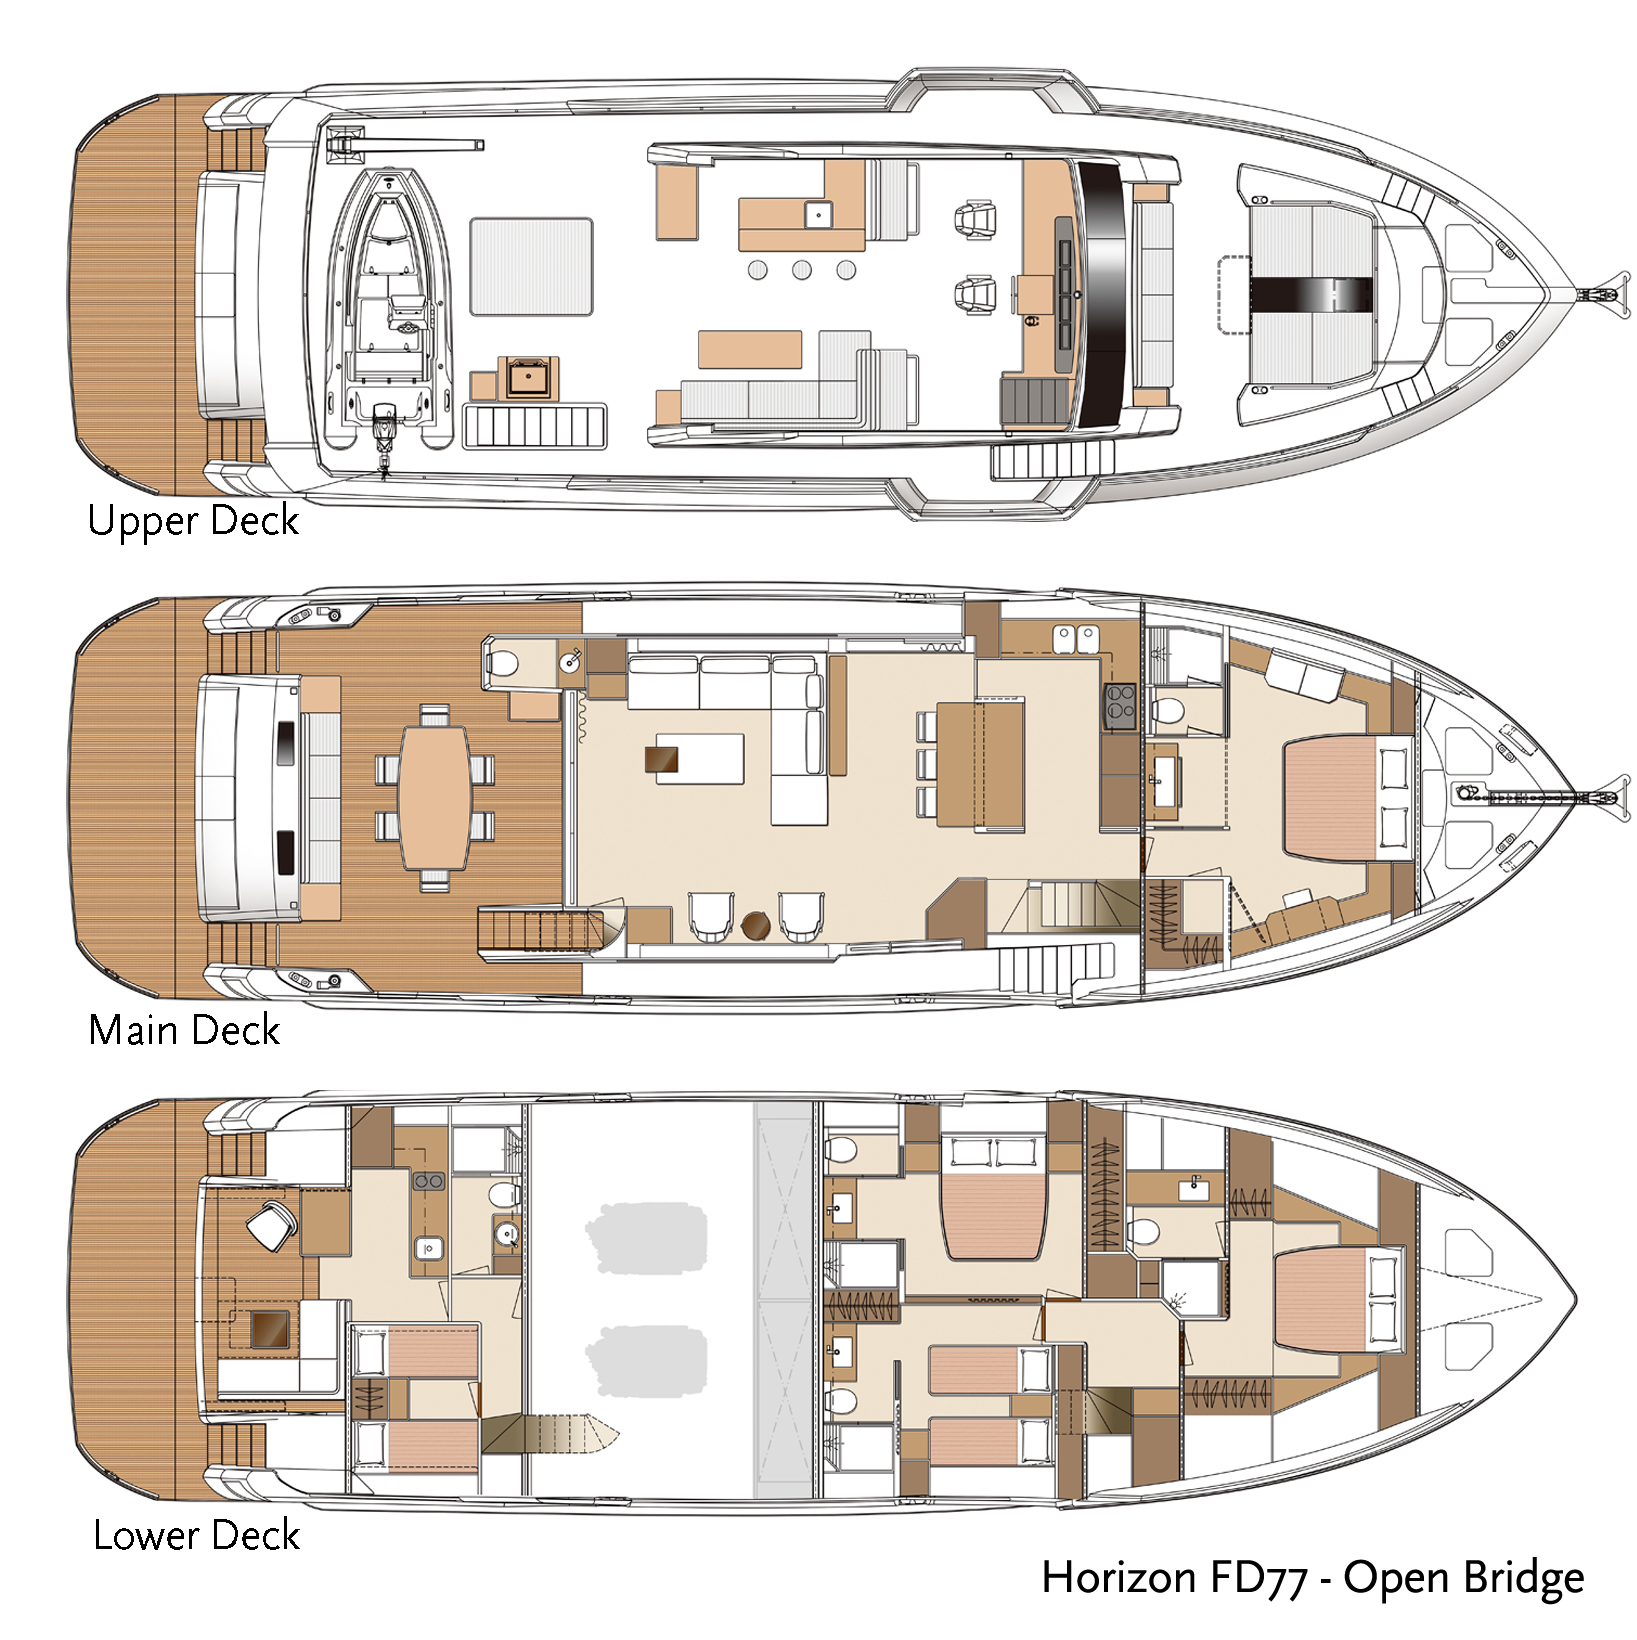 modern yacht plans